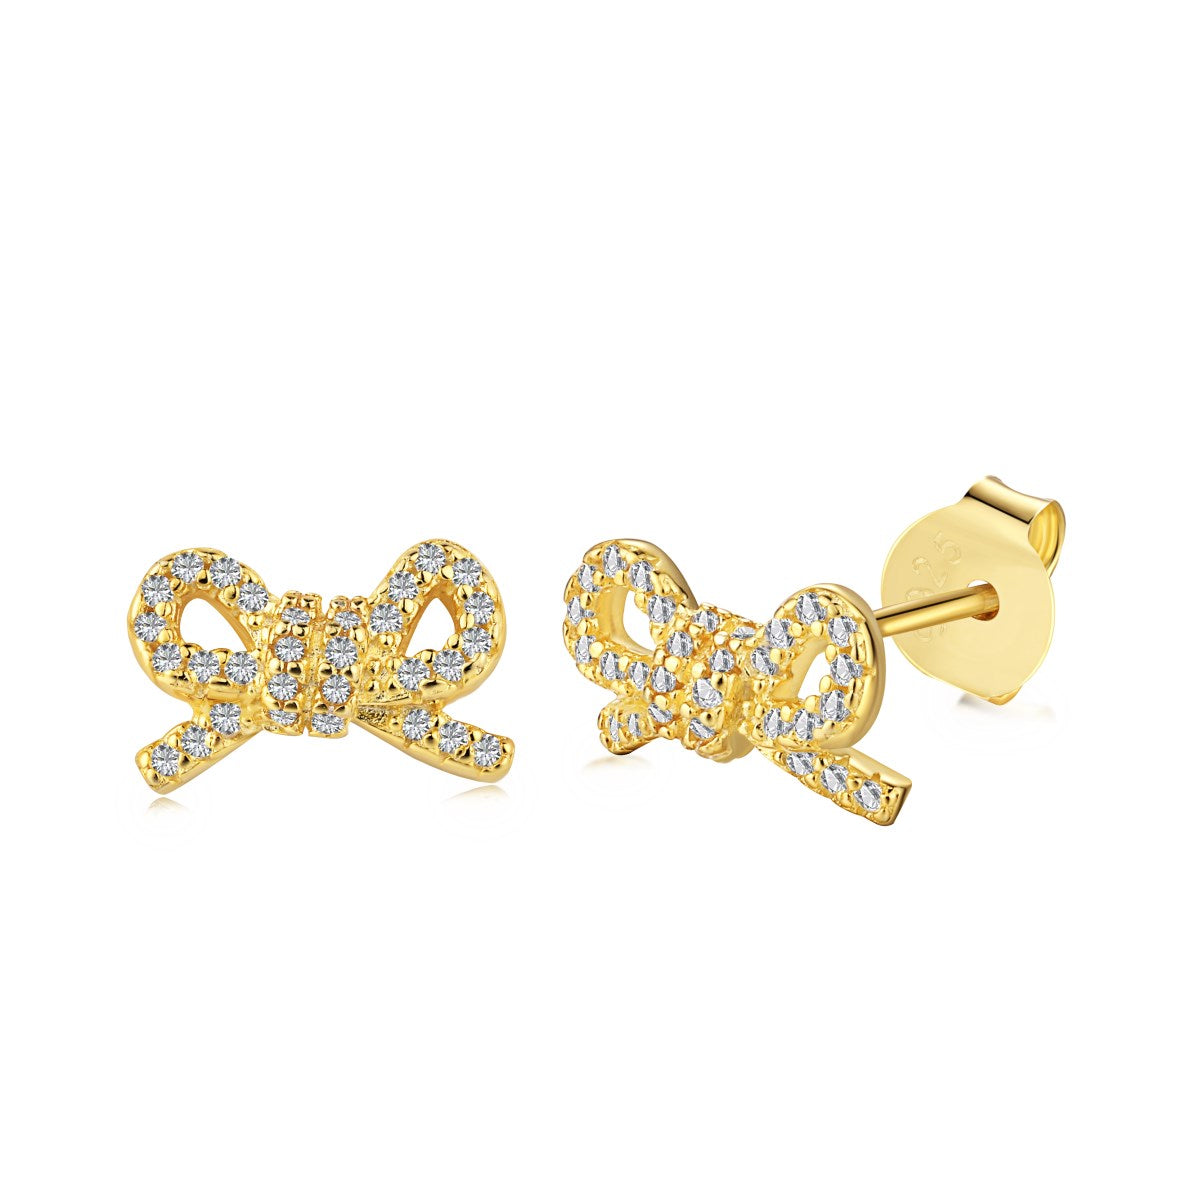 Sterling Silver Micropave Bowknot Stud Earrings - HK Jewels